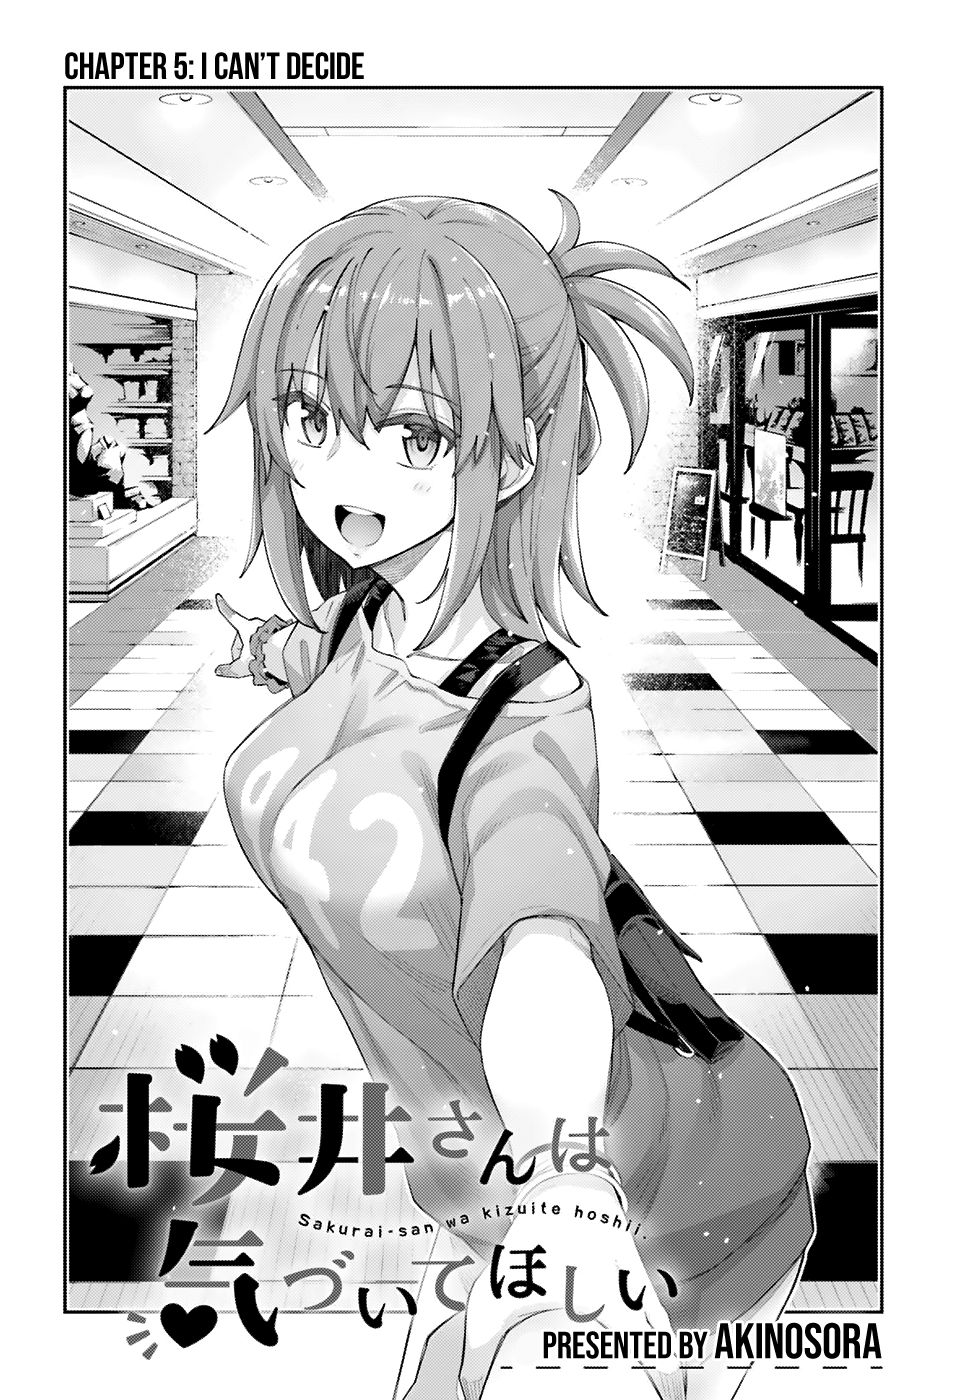 Sakurai-san Wants To Be Noticed - chapter 5 - #5